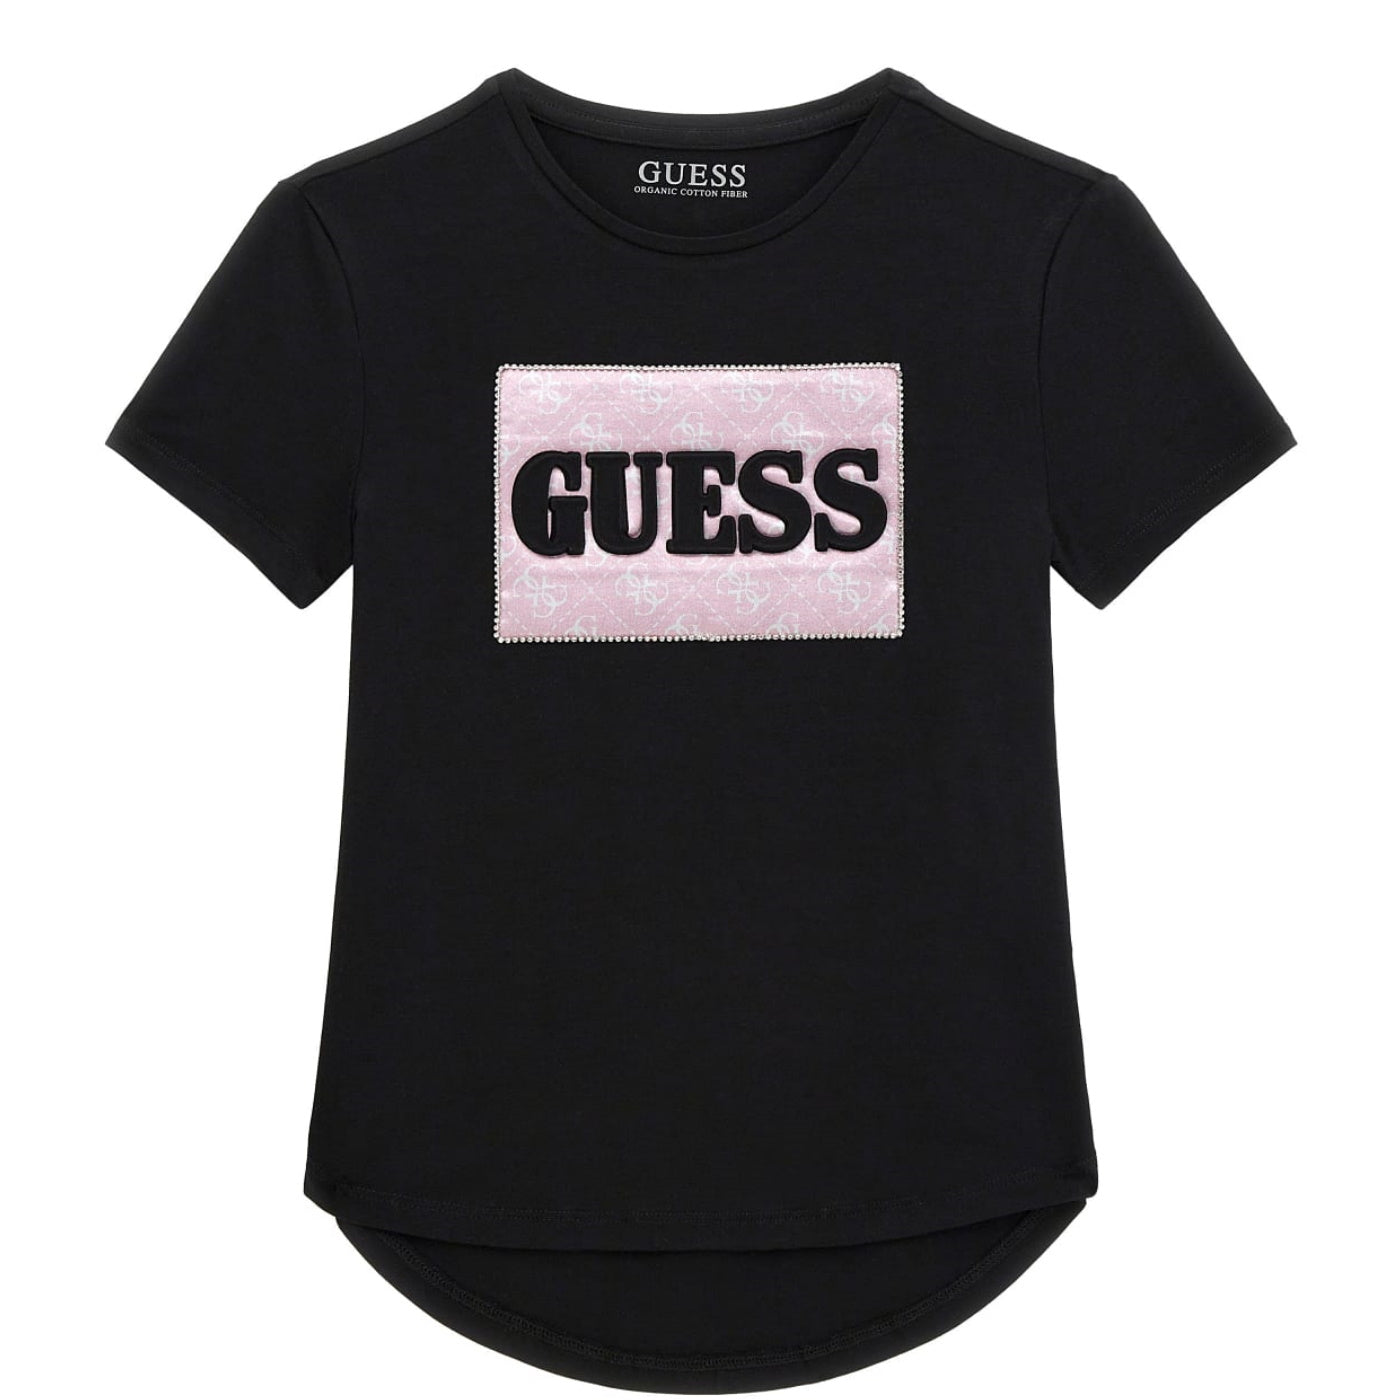 Guess t-shirt girl